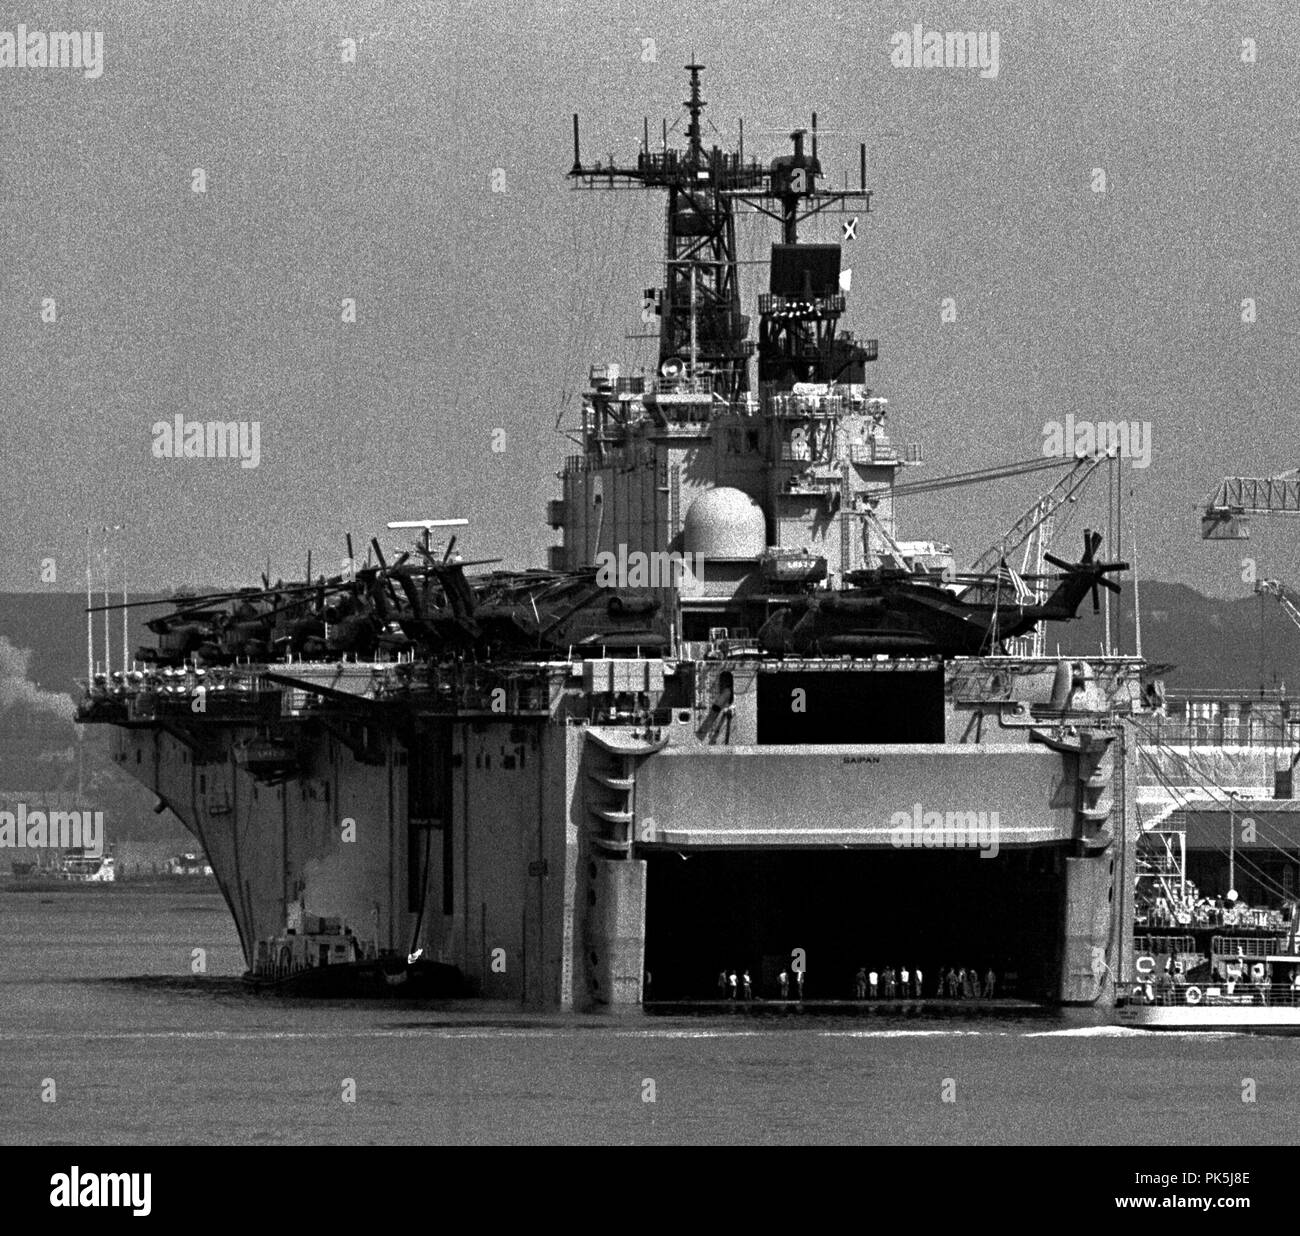 AJAXNETPHOTO. 1984. PORTSMOUTH, ENGLAND.  - ASSAULT SHIP - USS SAIPAN VISITS THE NAVAL BASE. PHOTO:JONATHAN EASTLAND/AJAX  REF: 100484 7A Stock Photo